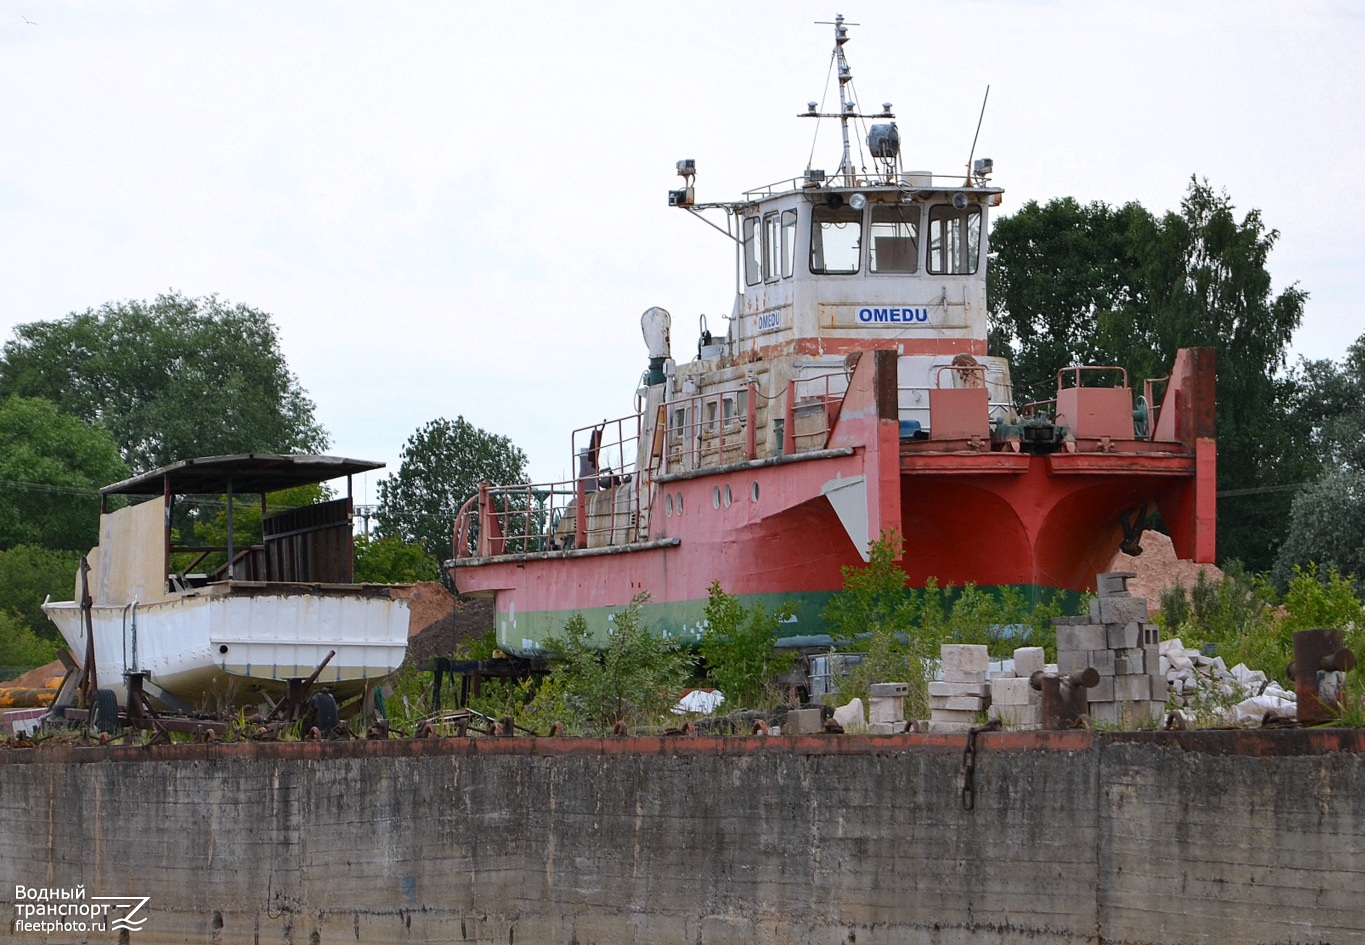 Неопознанное судно - тип Адмиралтеец, Omedu. Estonia